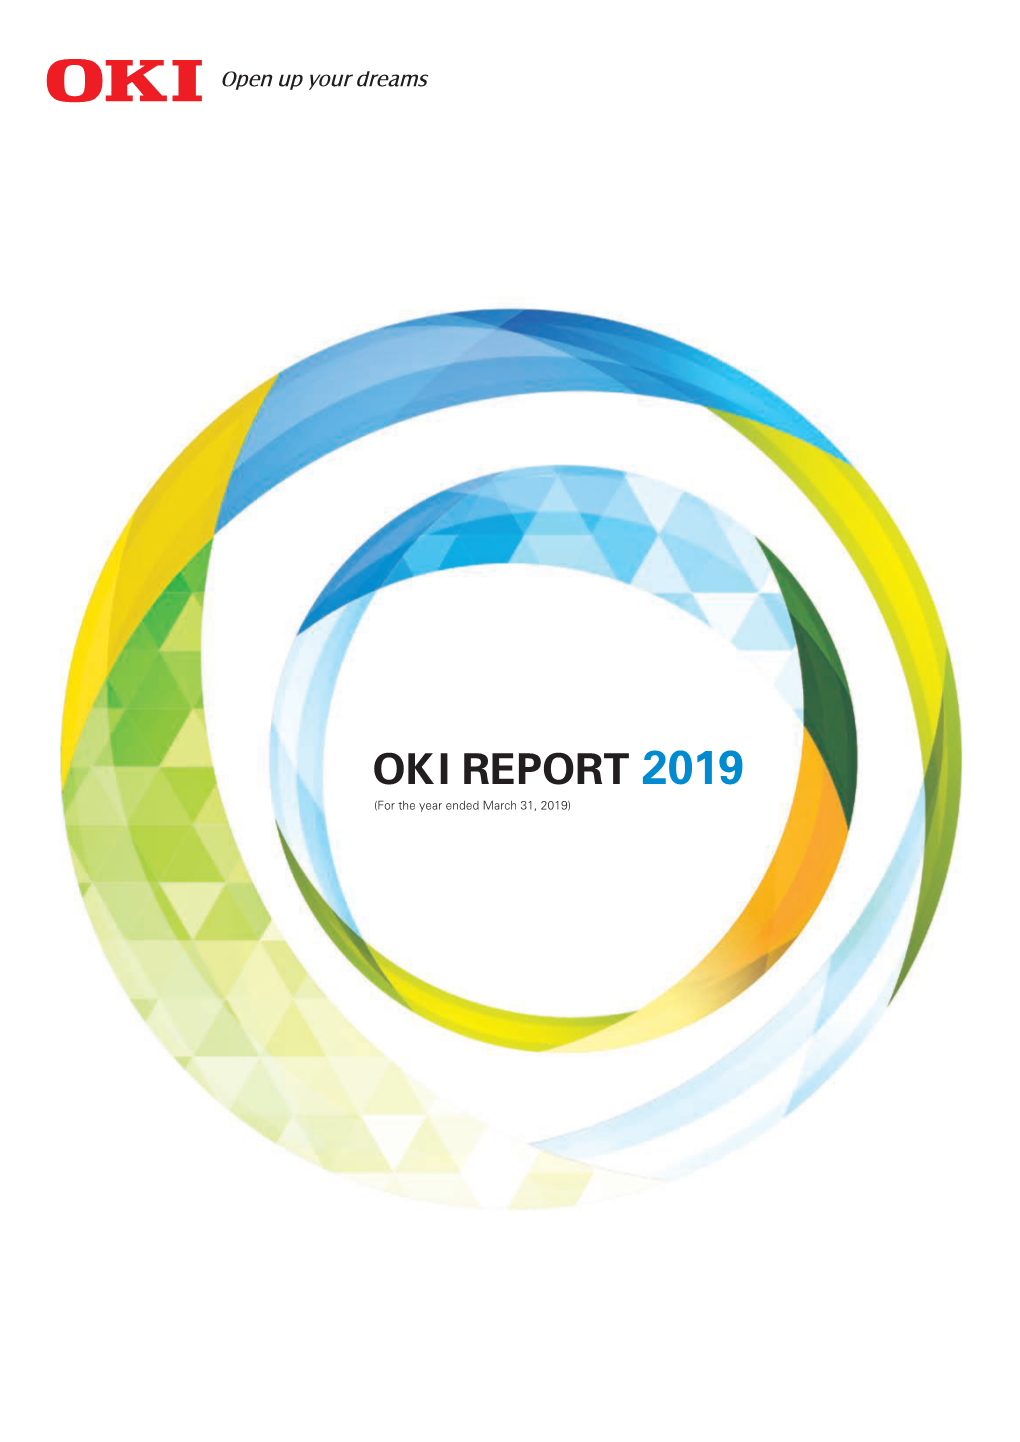 OKI Report 2019 VALUE CREATION STORY 2018 the PATH to VALUE CREATION ���10����� Opt���� ���Er �E��Or ���Te� Re�E��E